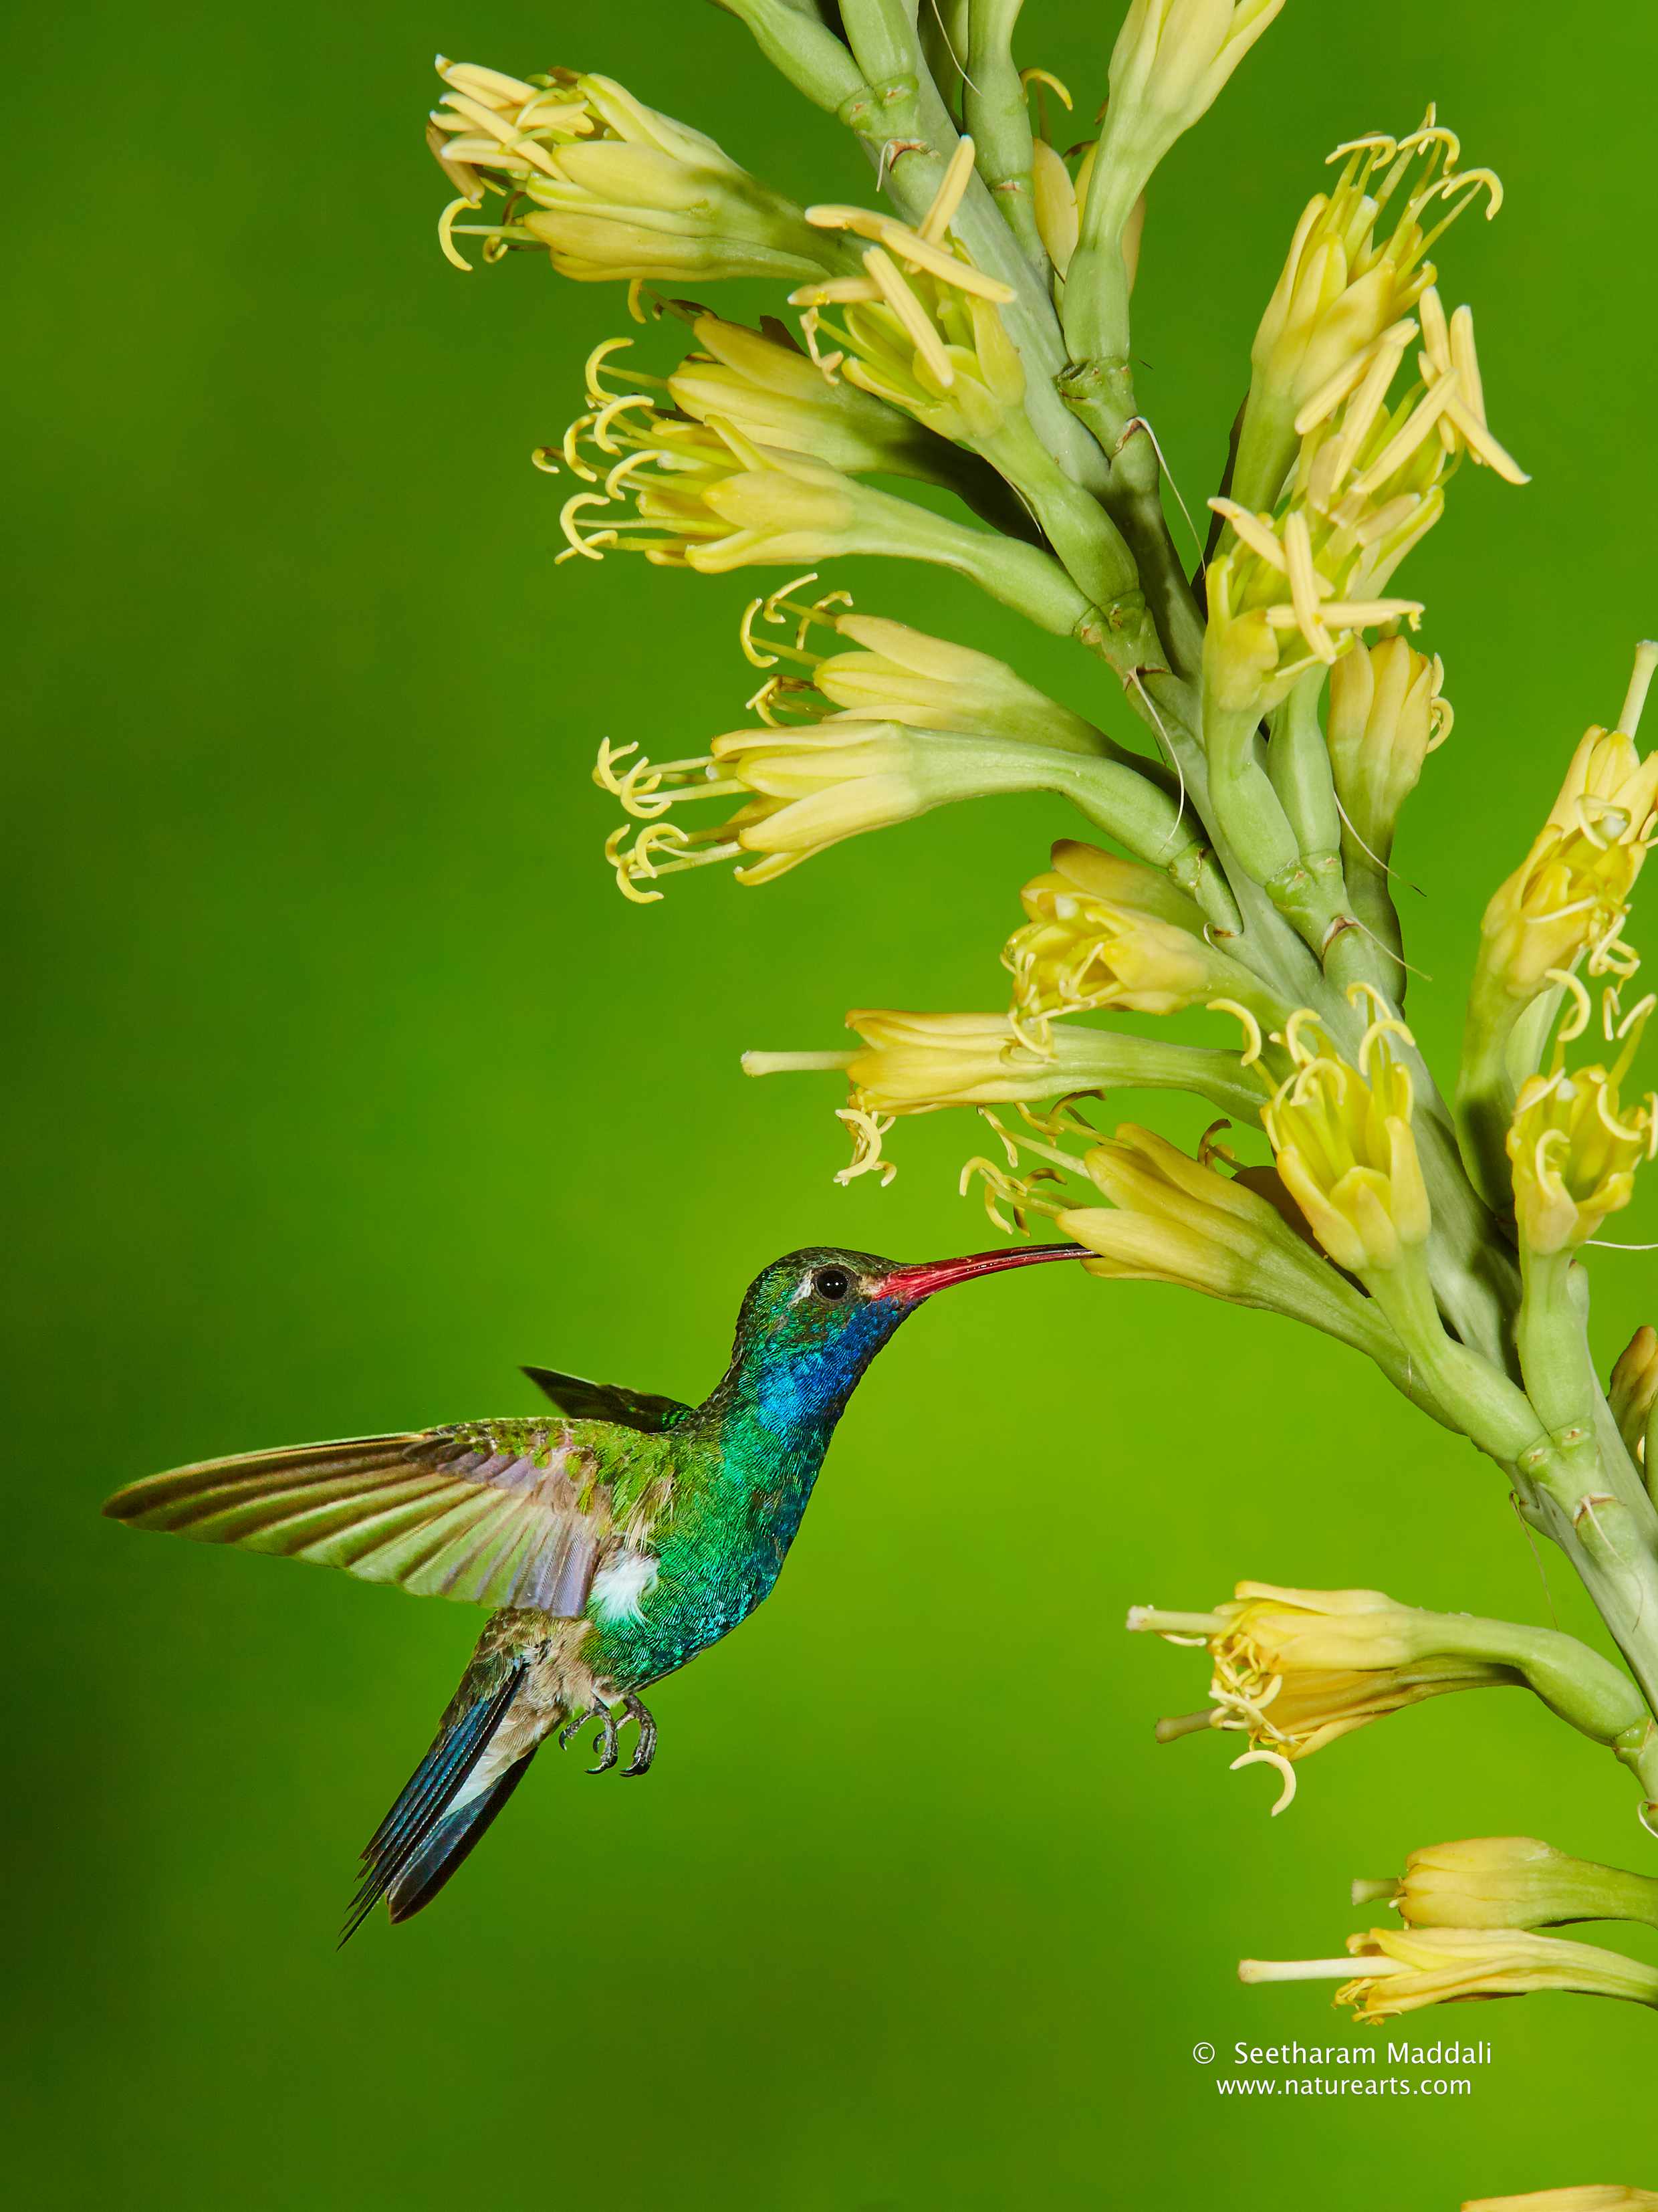 Borad-billed hummingbird